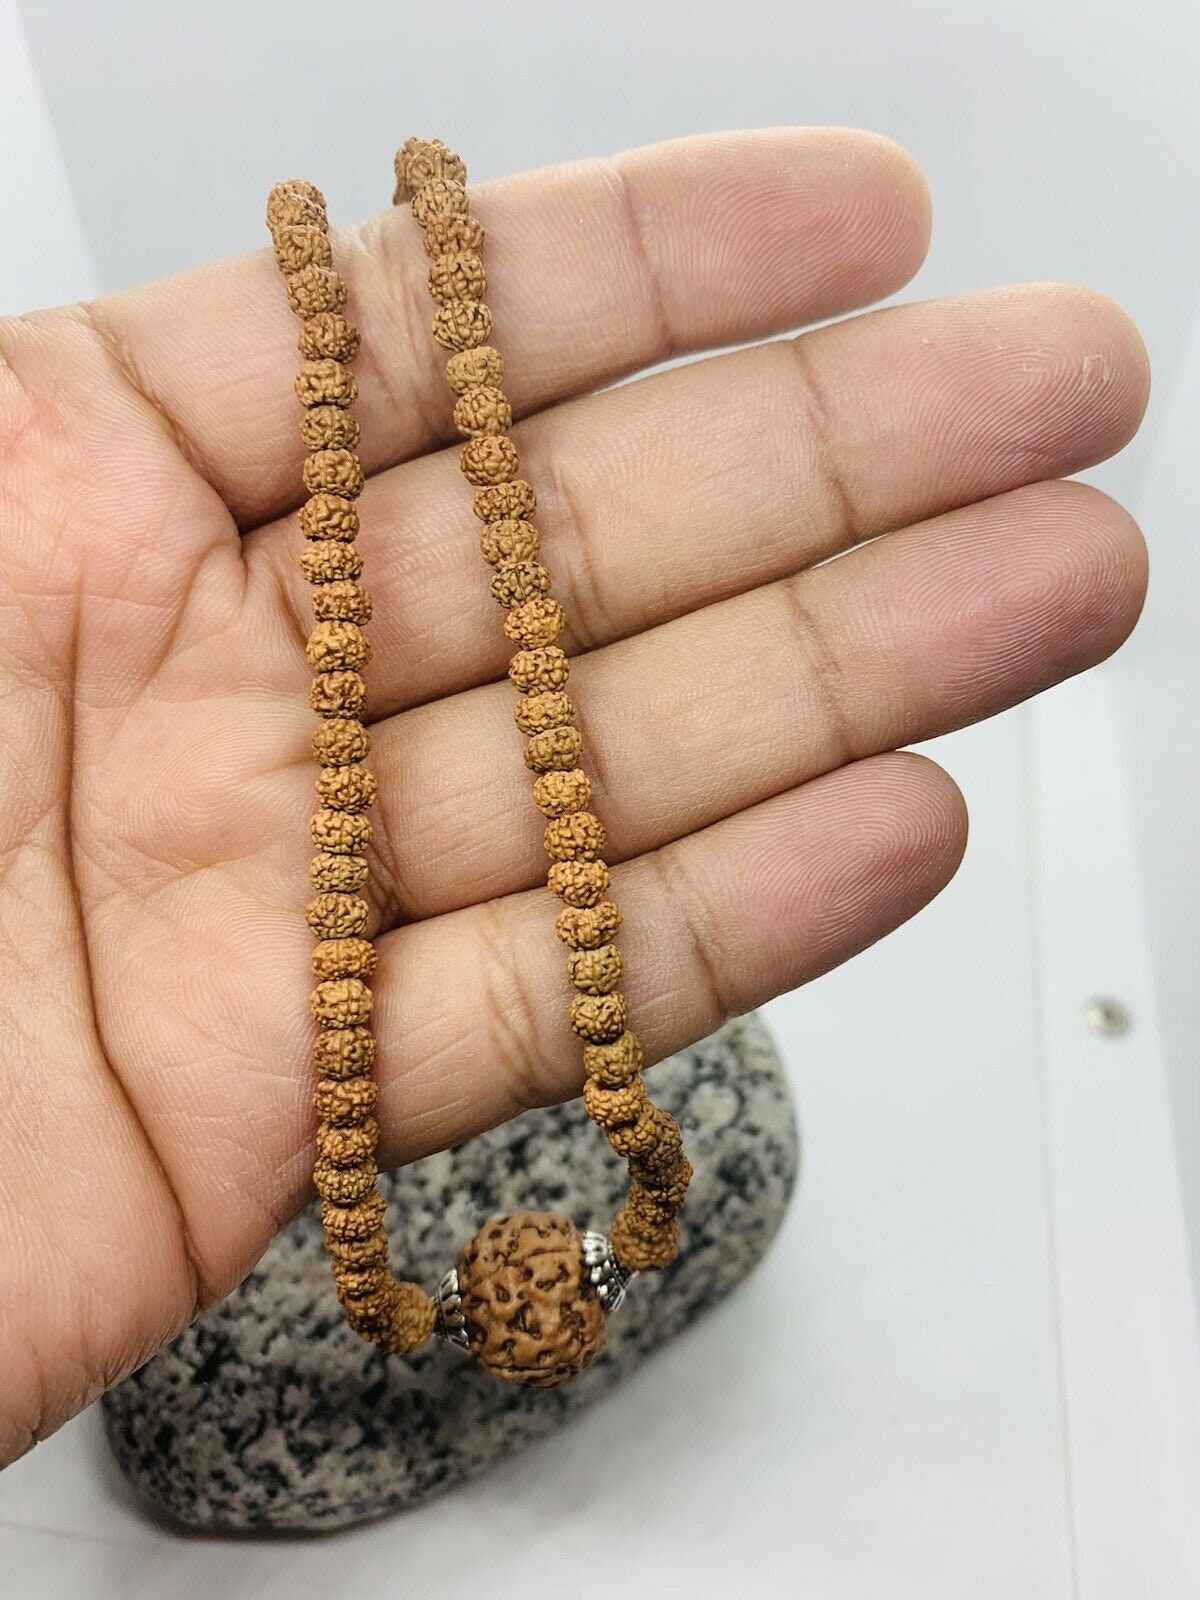 Rudraksha choker necklace - Spiritual jewelry - 5 Mukhi Rudraksha - Natural seed - Chakra balance jewelry Necklace - Meditation/Protection